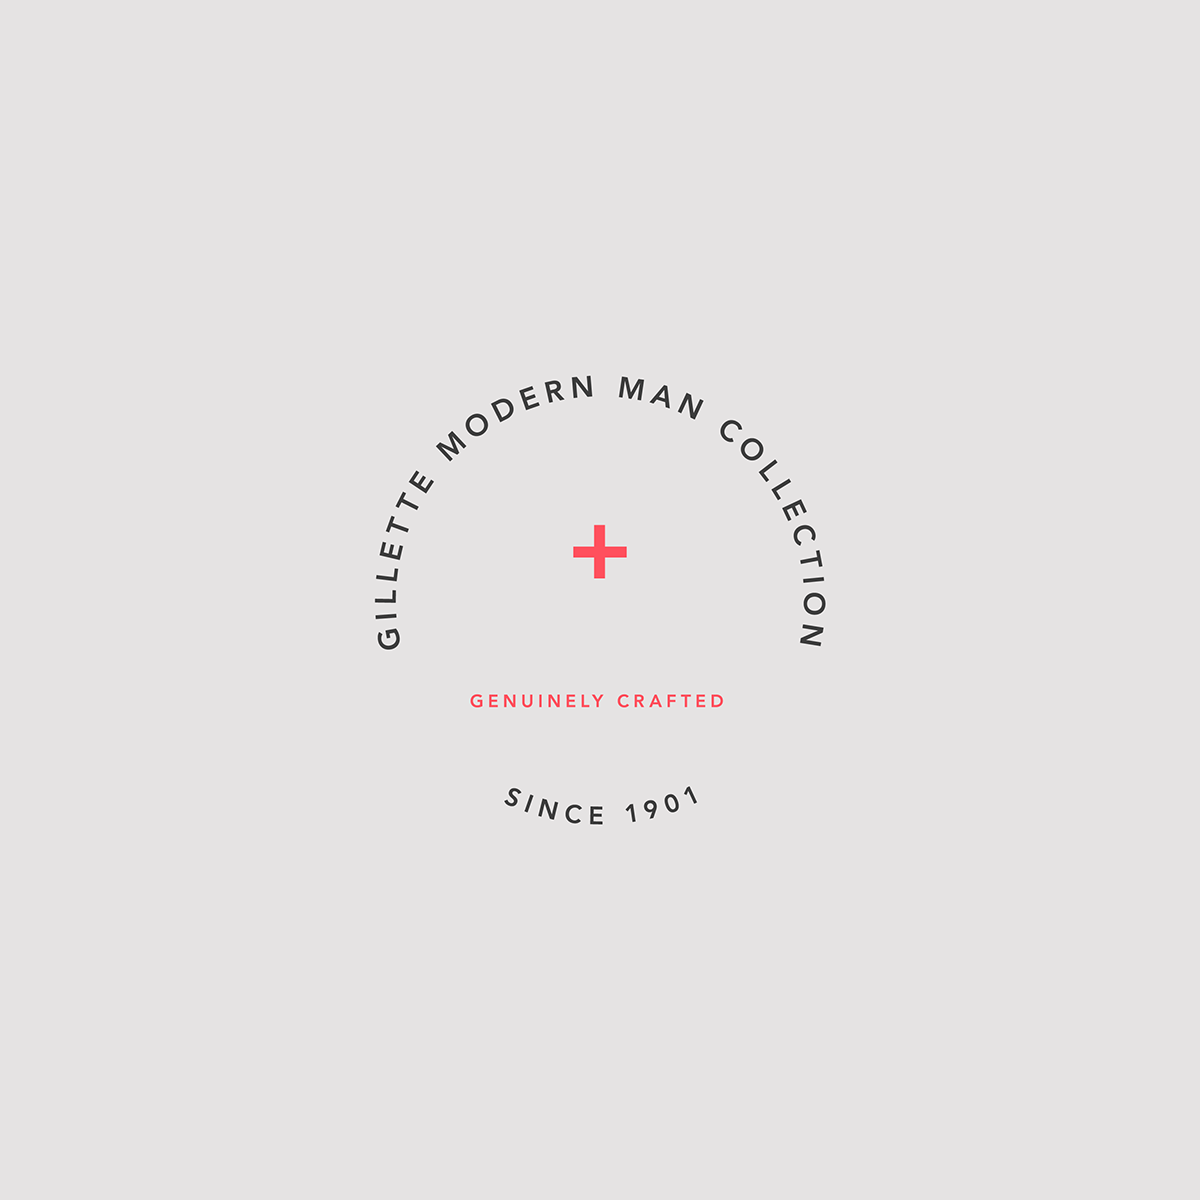 Web type Layout print modern clean simple elegant GILLETTE shave minimal design campaign logo identity